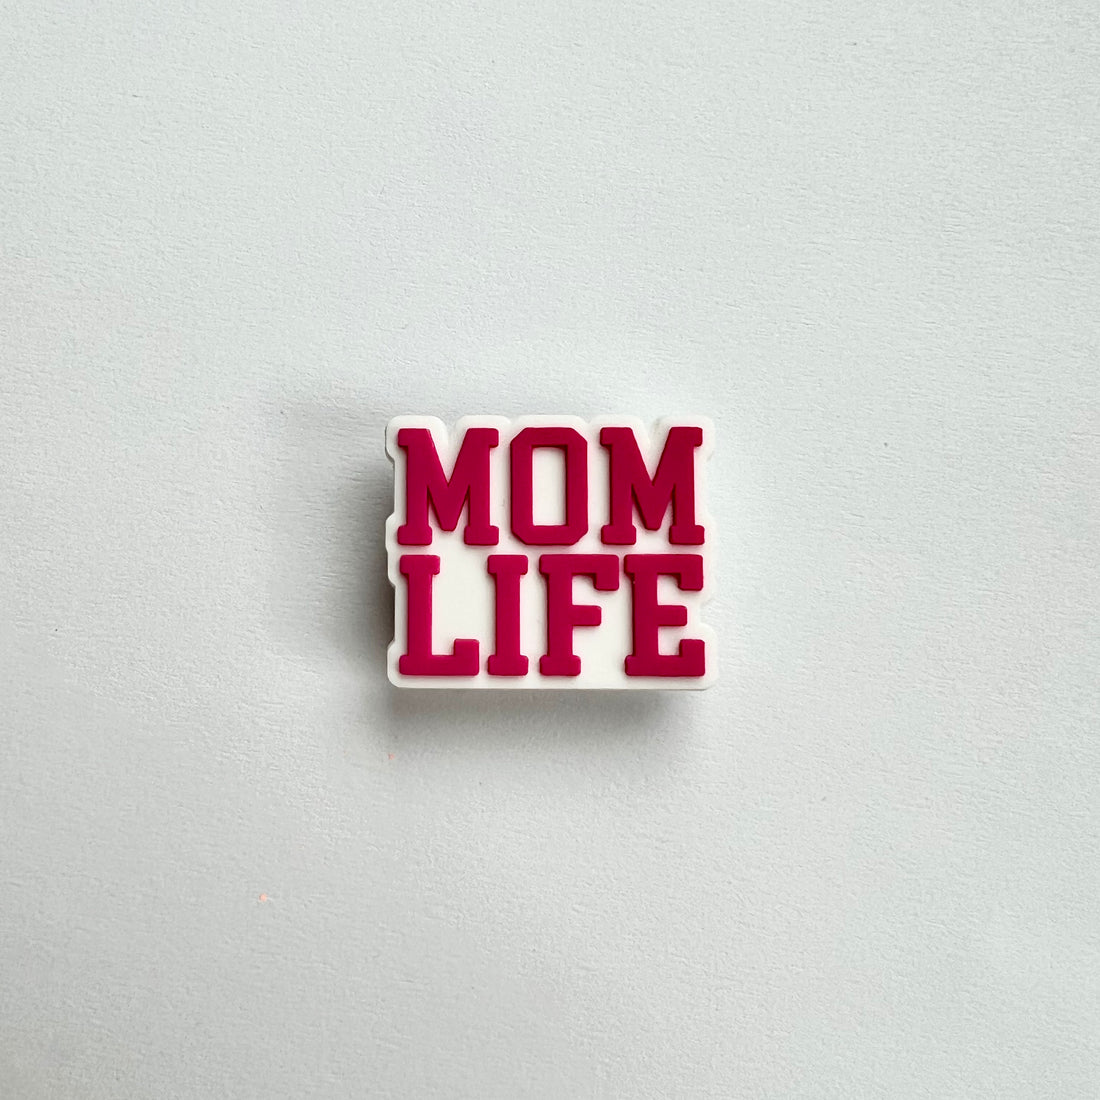 Mom Life Charm